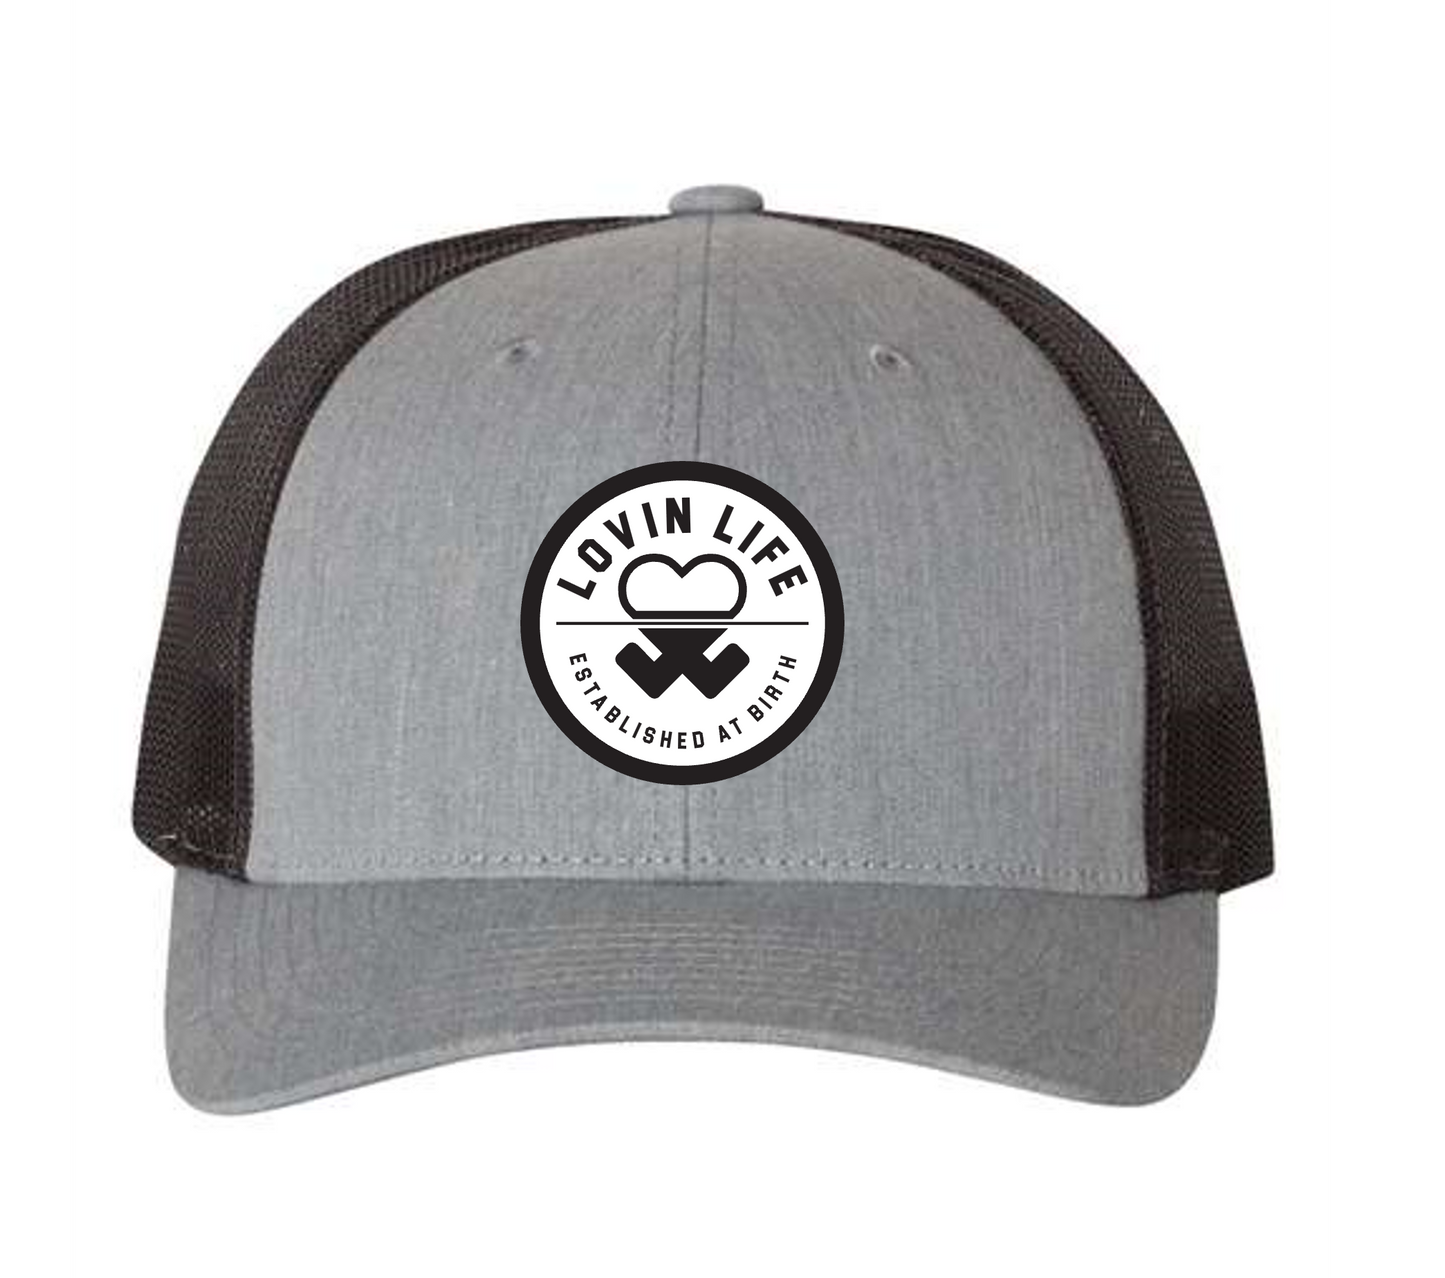 Established Baseball Cap - Grey